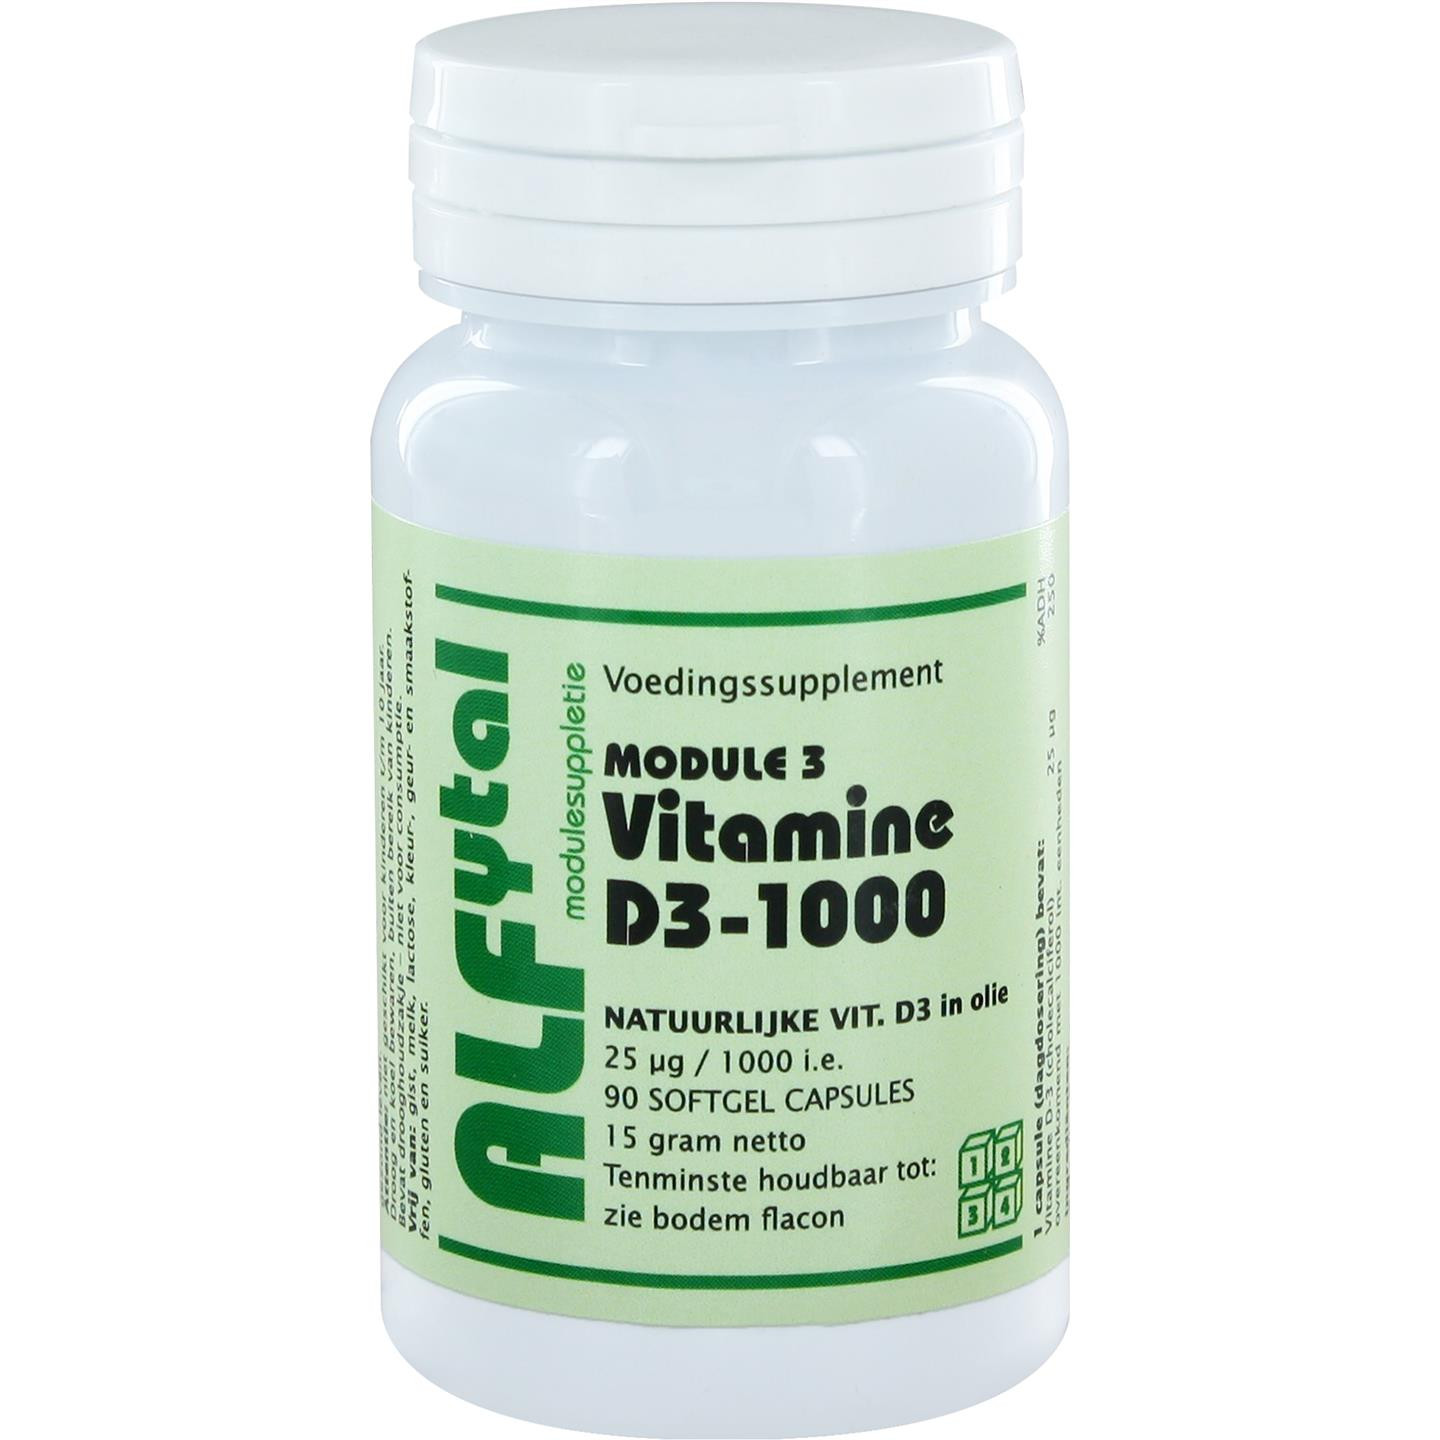 Vitamine D3-1000 (module 3)